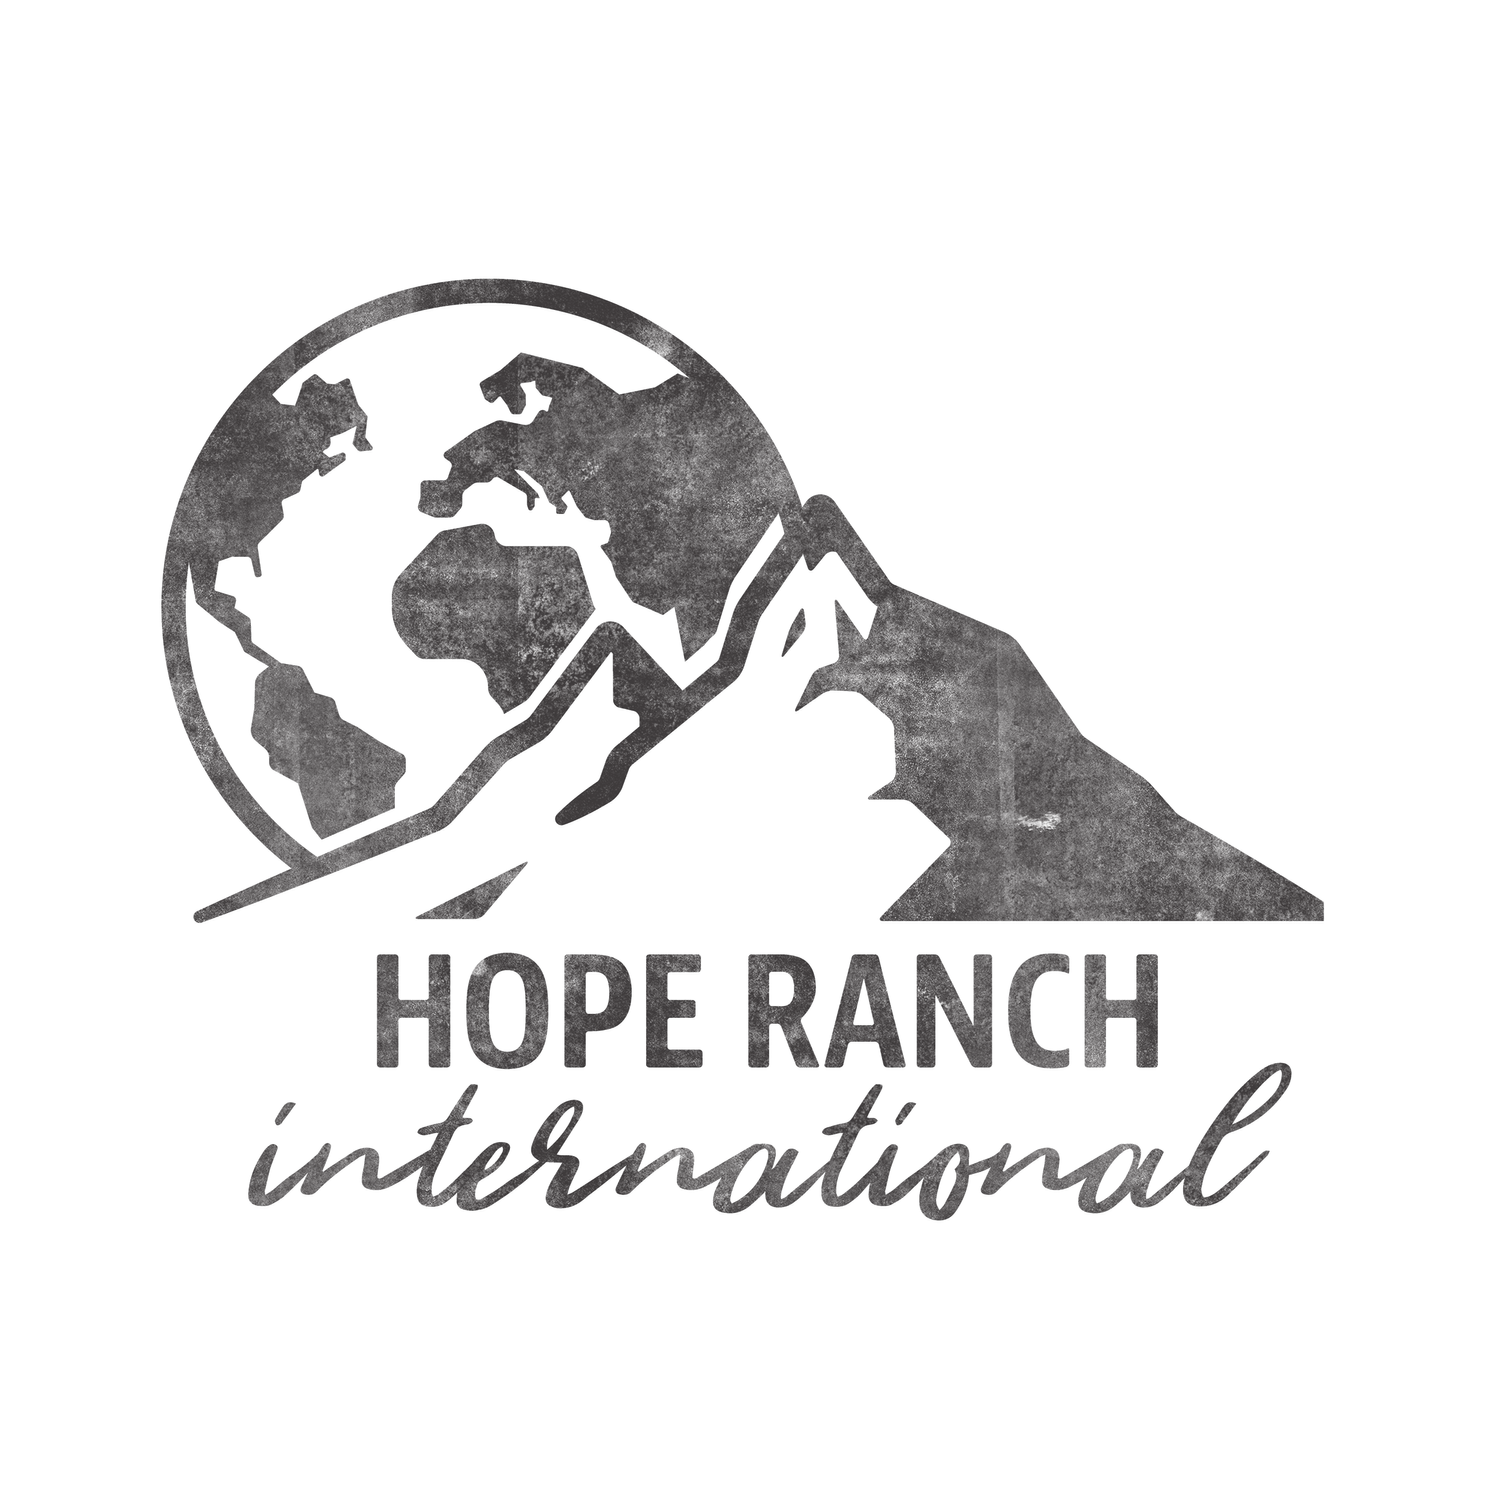 Hope Ranch International